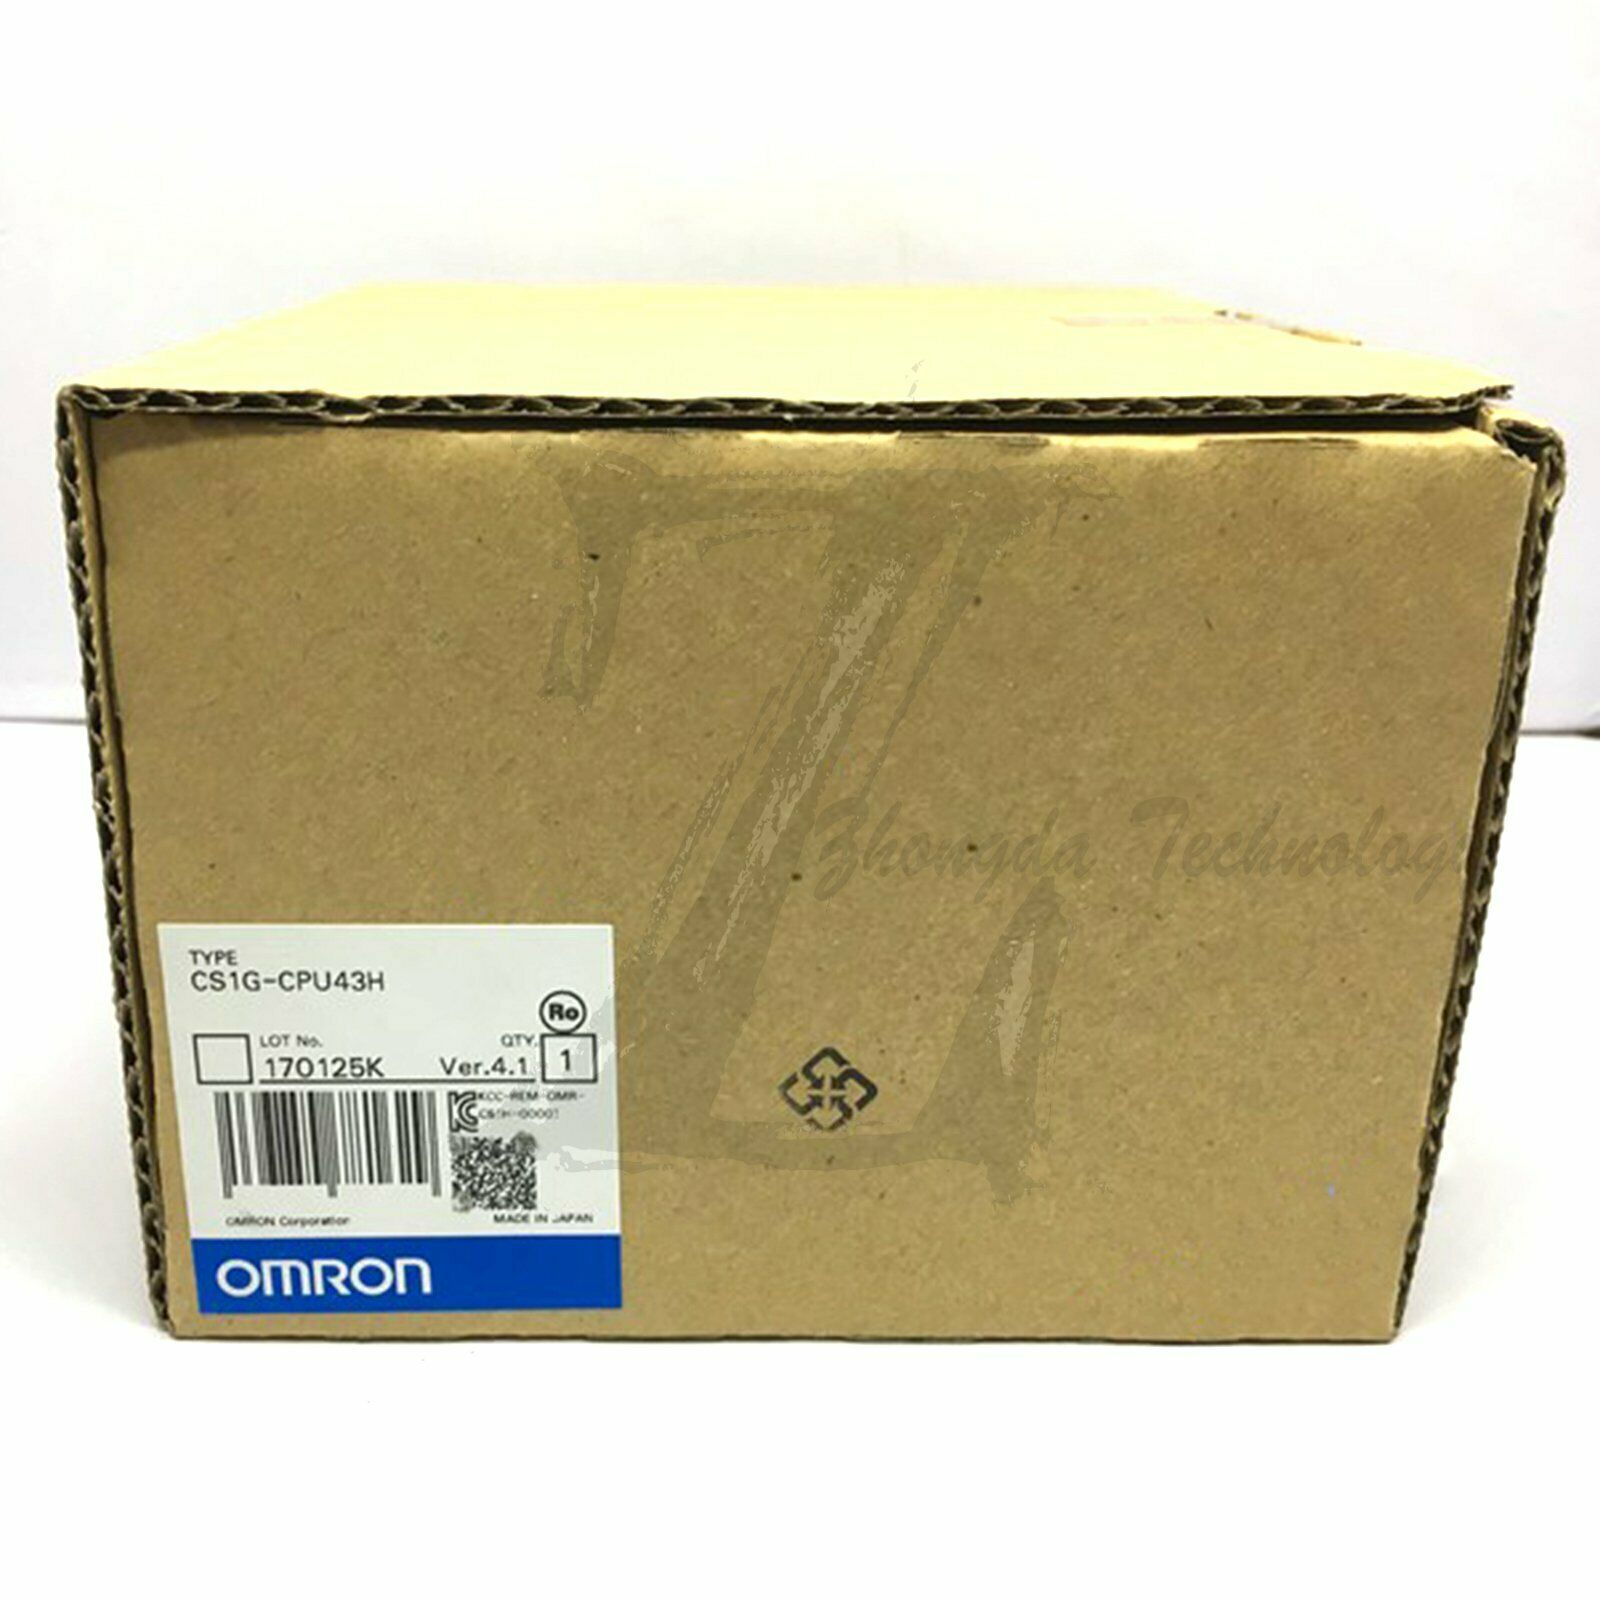 NEW Omron CS1G Series CPU Unit CS1G-CPU43H Version 4.1